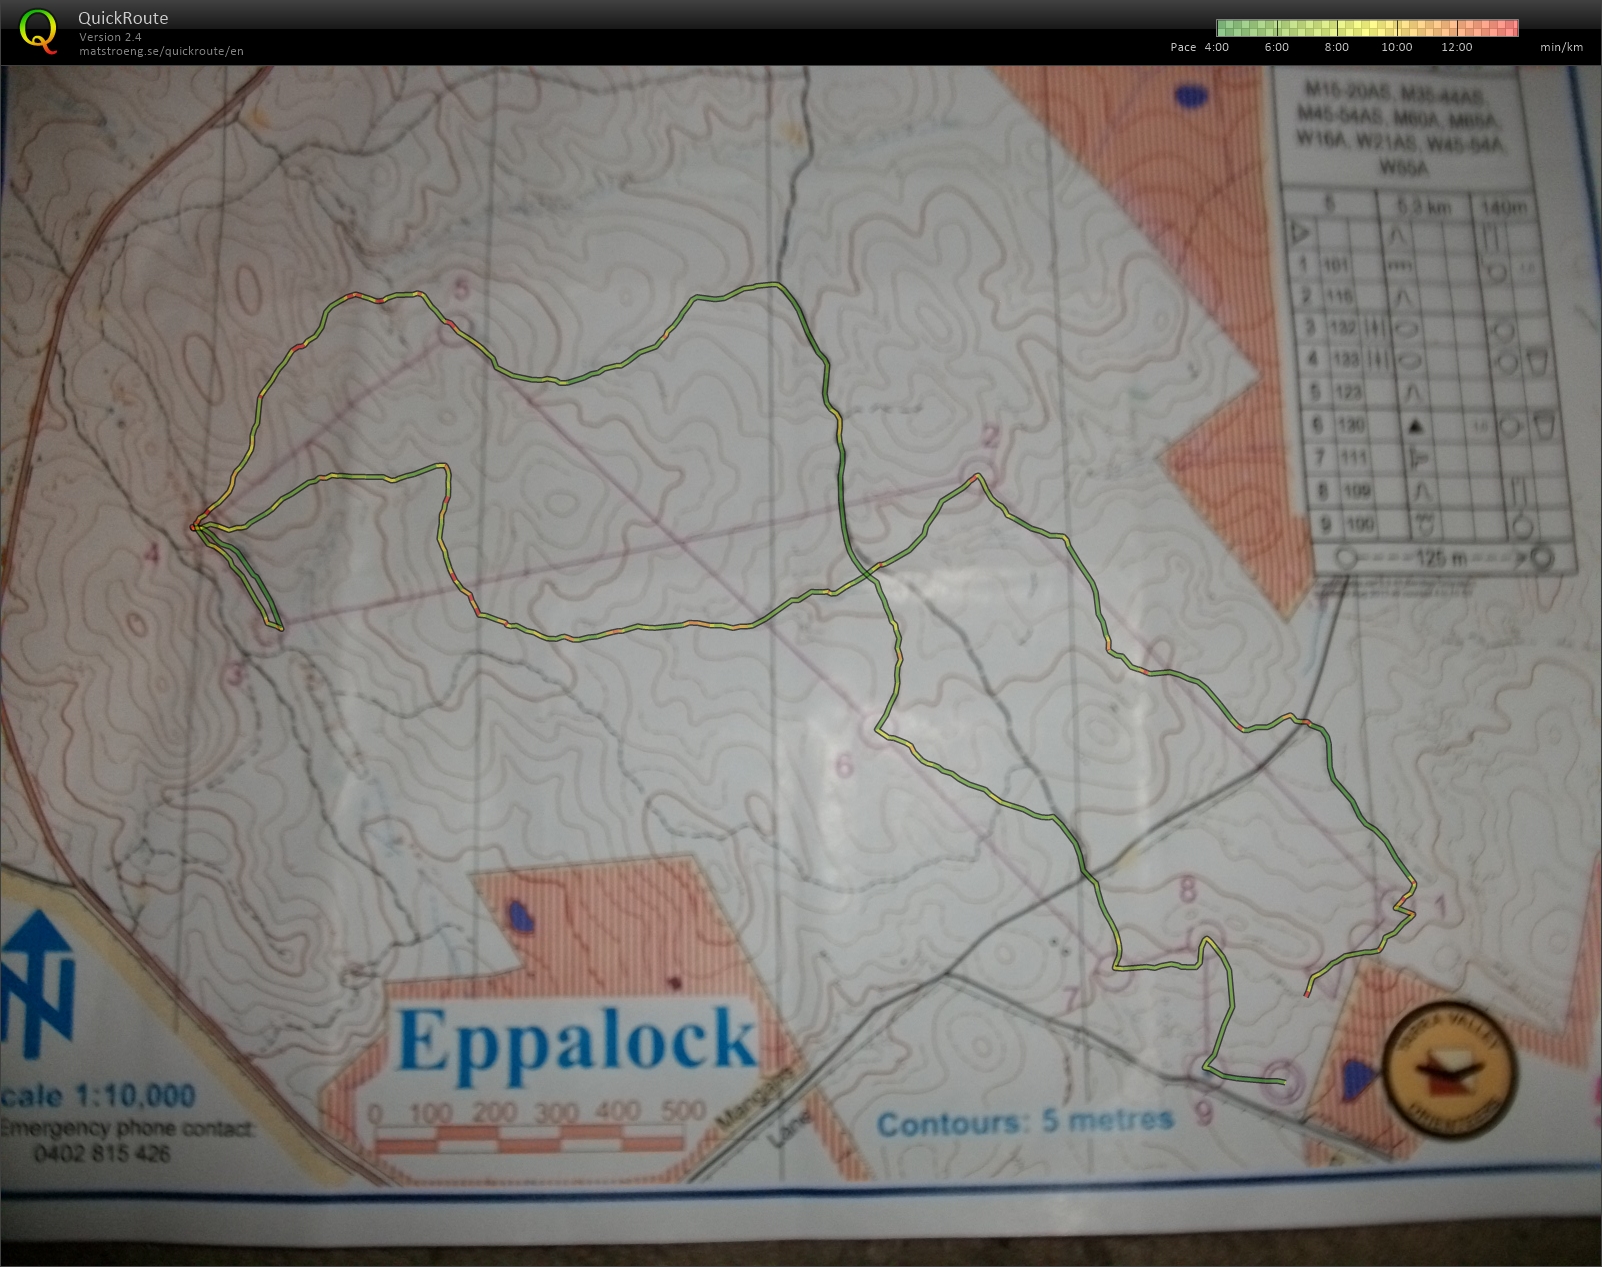 State Series #7 Eppalock (17-08-2013)